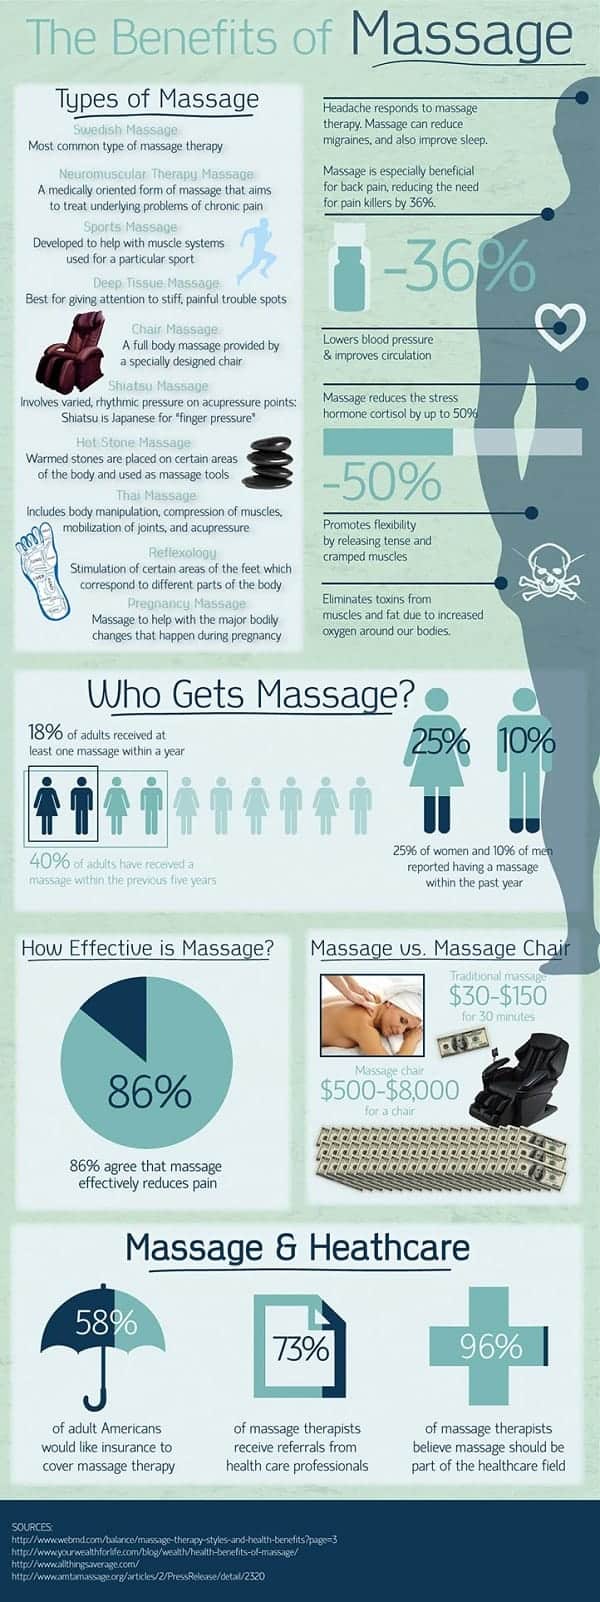 The 7 Benefits of Massage